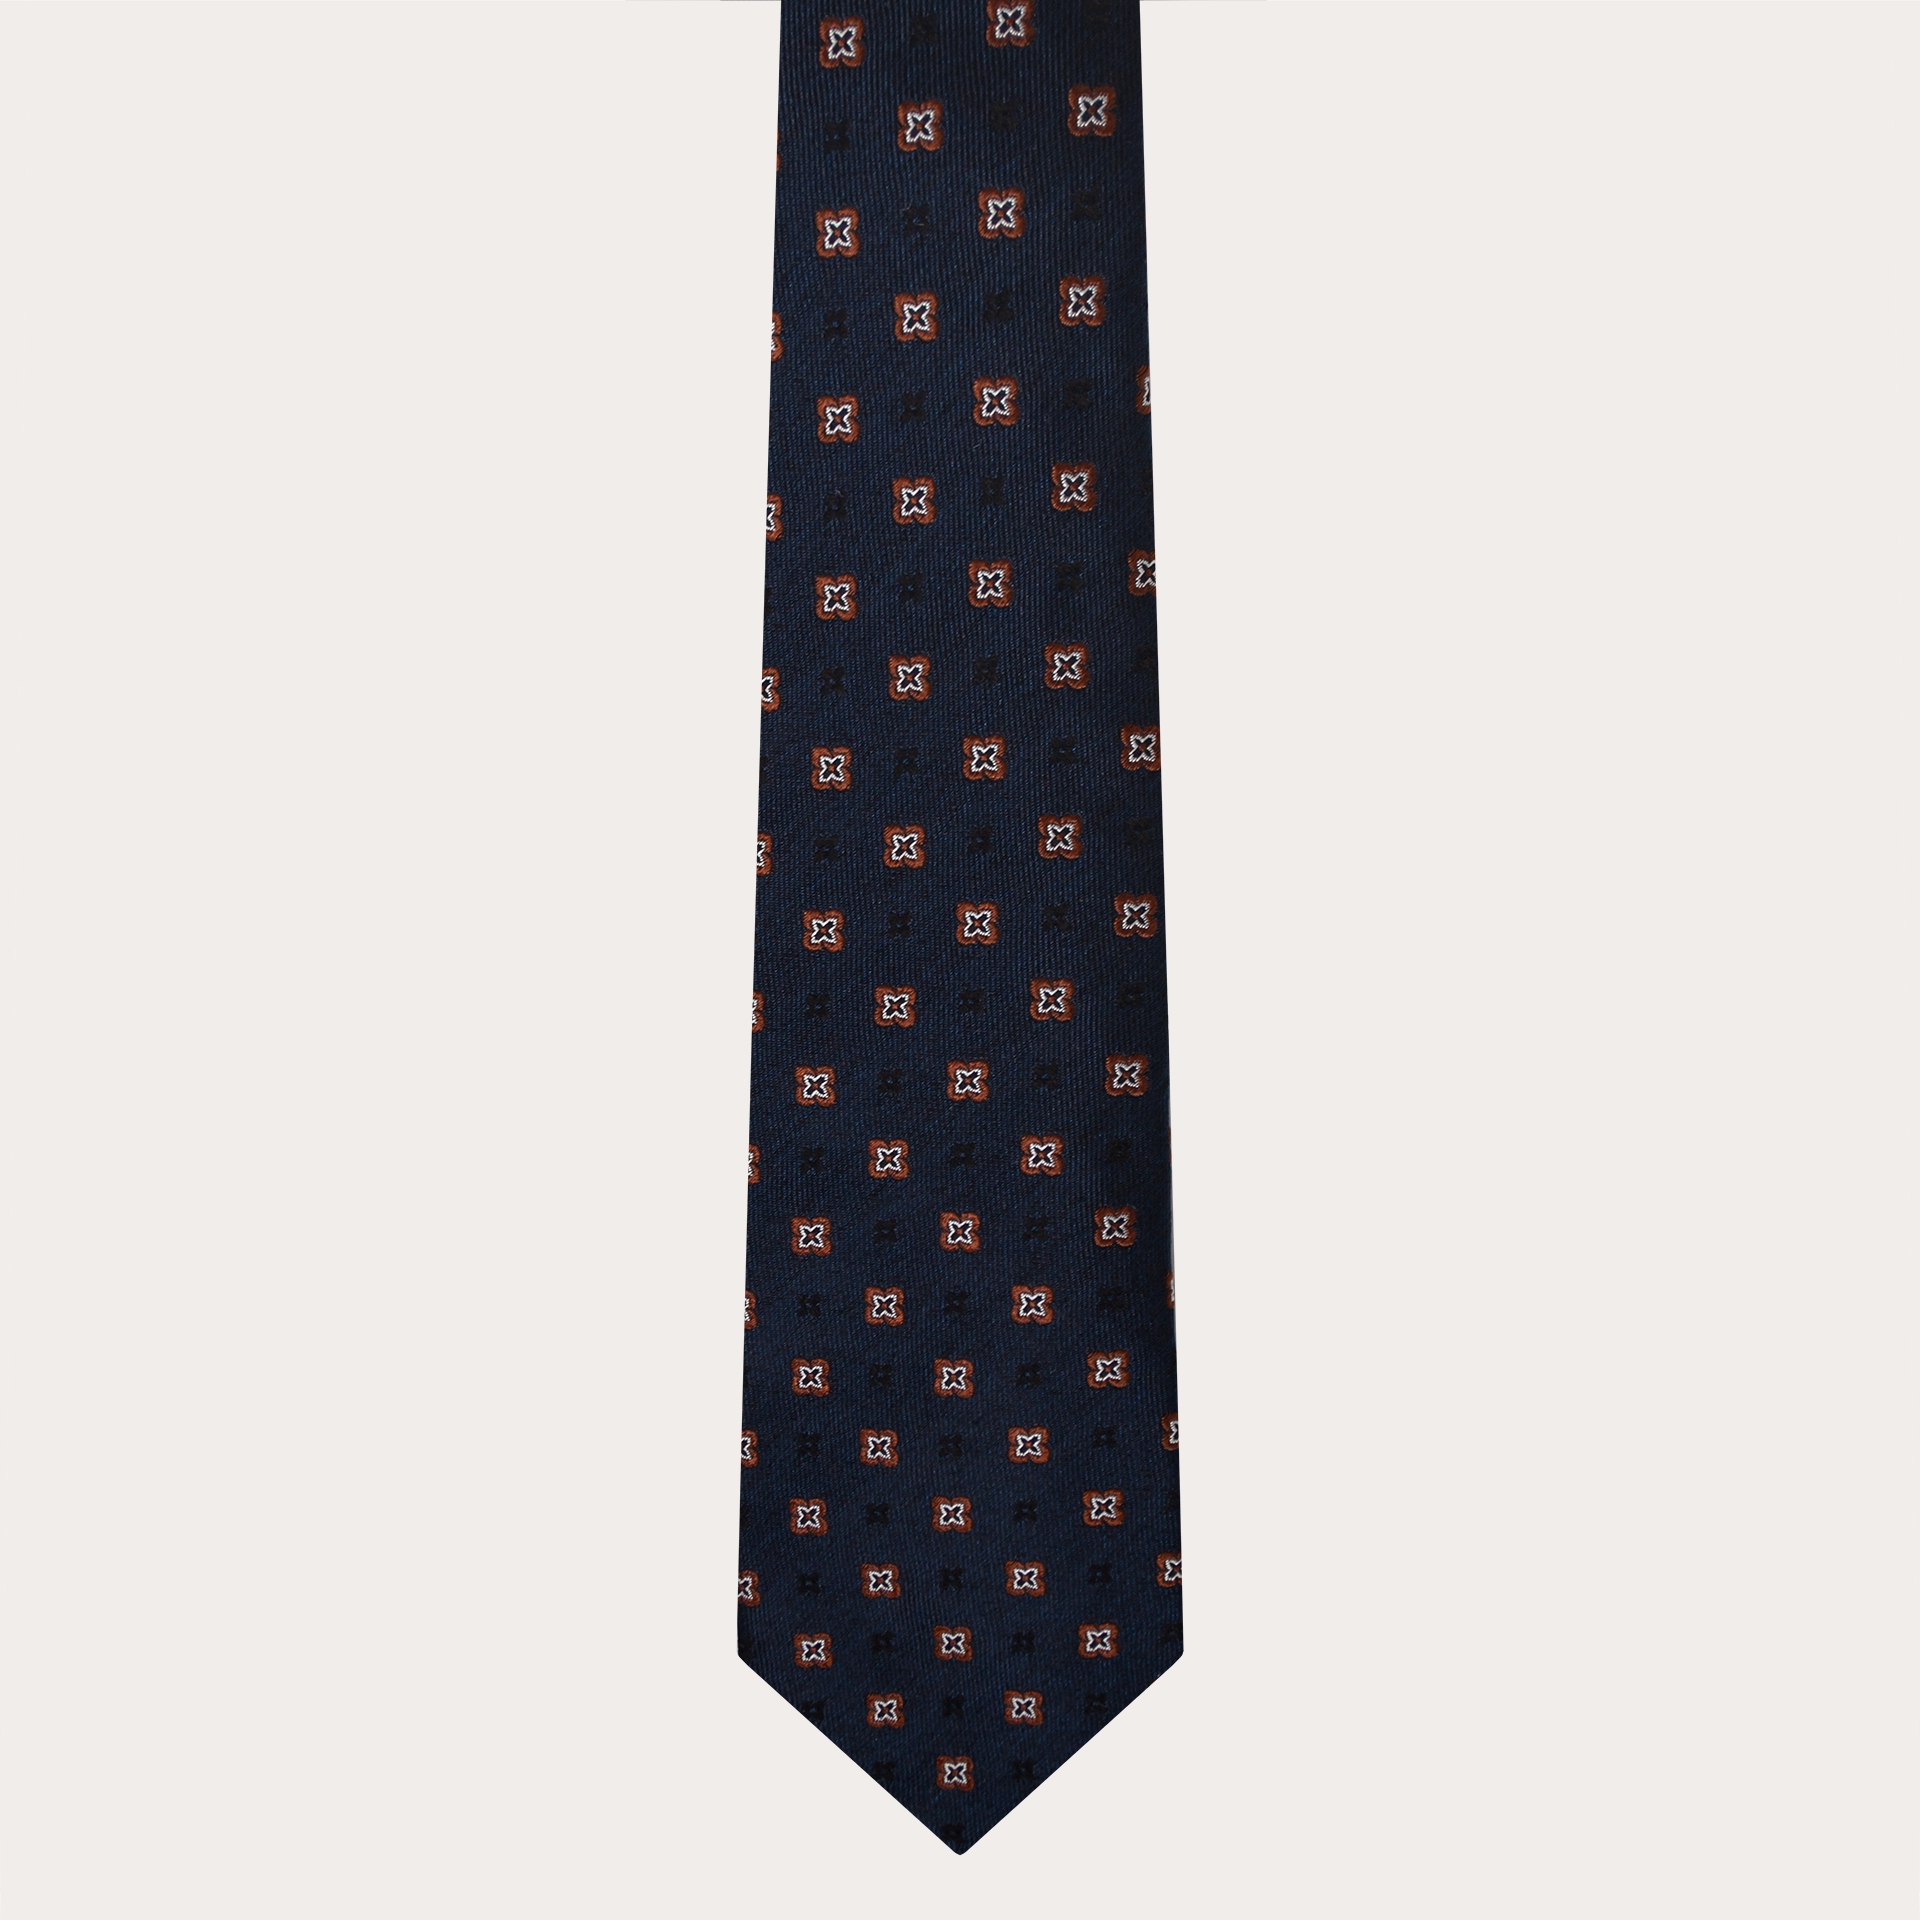 BRUCLE Formale Krawatte aus Jacquard-Seide, blau mit braunem Muster